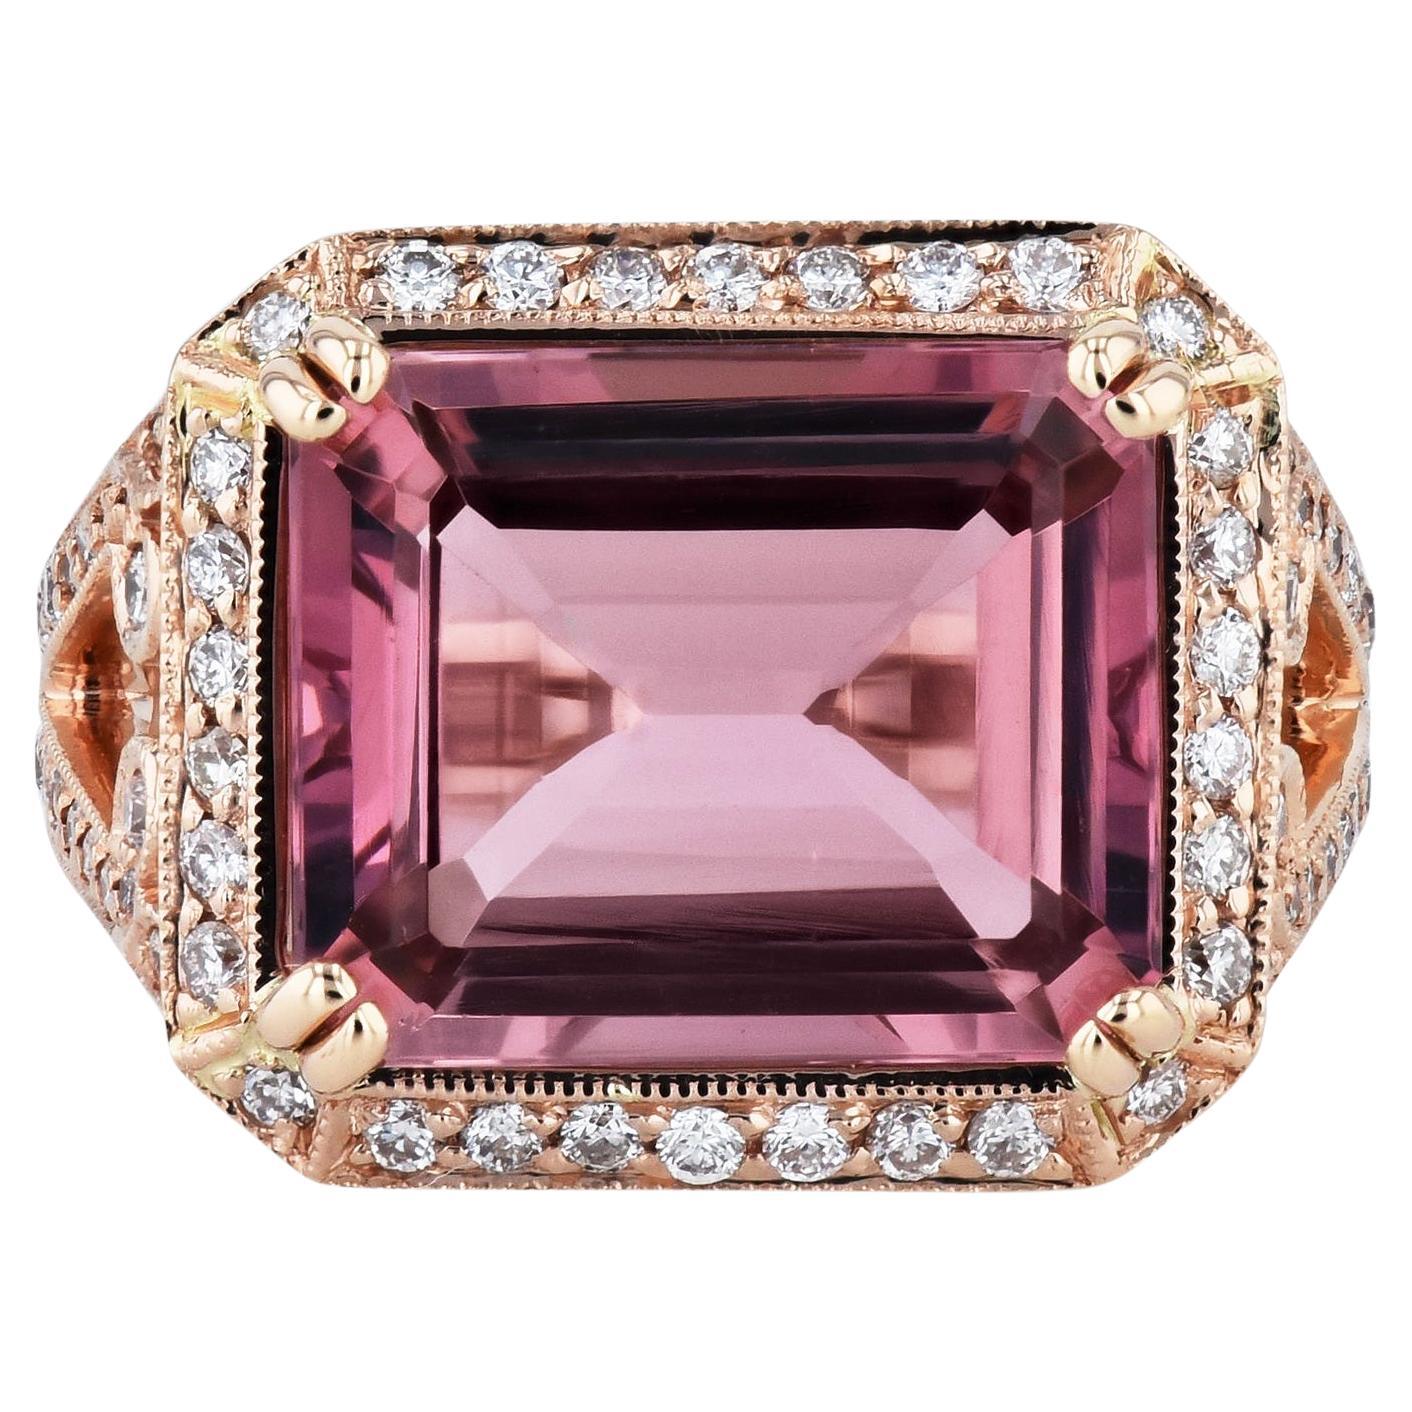 5.01 Carat Handmade Emerald Cut Pink Tourmaline Diamond Rose Gold Cocktail Ring